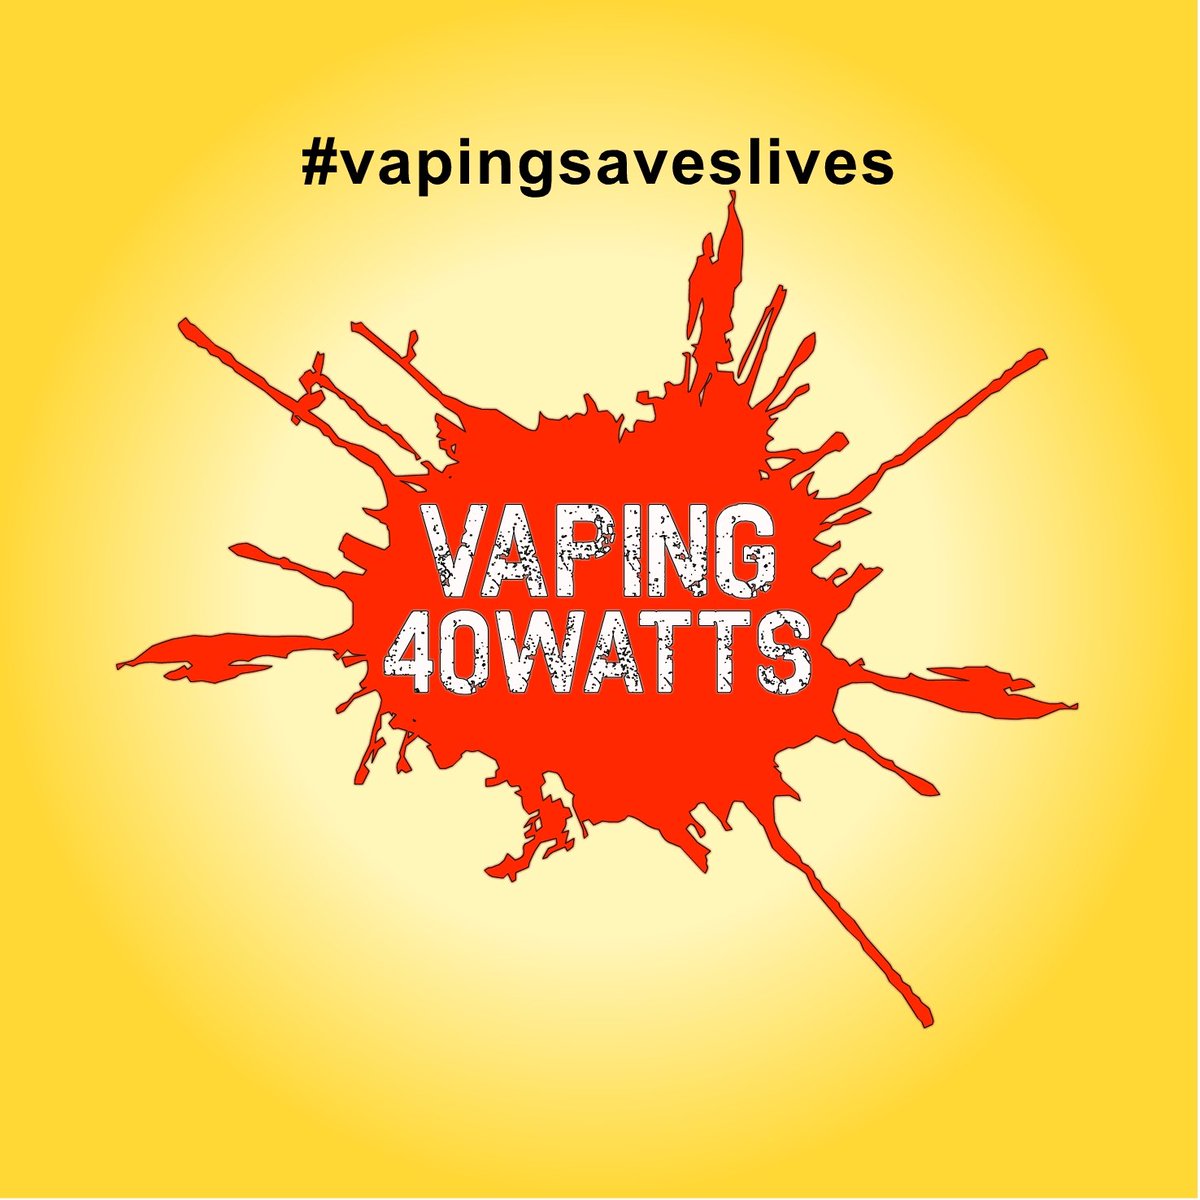 1 MONTH ..
#exsmoker #xsmoker #quitsmoking   . #Ukvaper #vaperuk #vapefamily #vapeon #vaping #vapinguk #Ukvape #ukvapers #ukvapes #vapelove #vaporizer #vapeproducts #vapingsaveslives